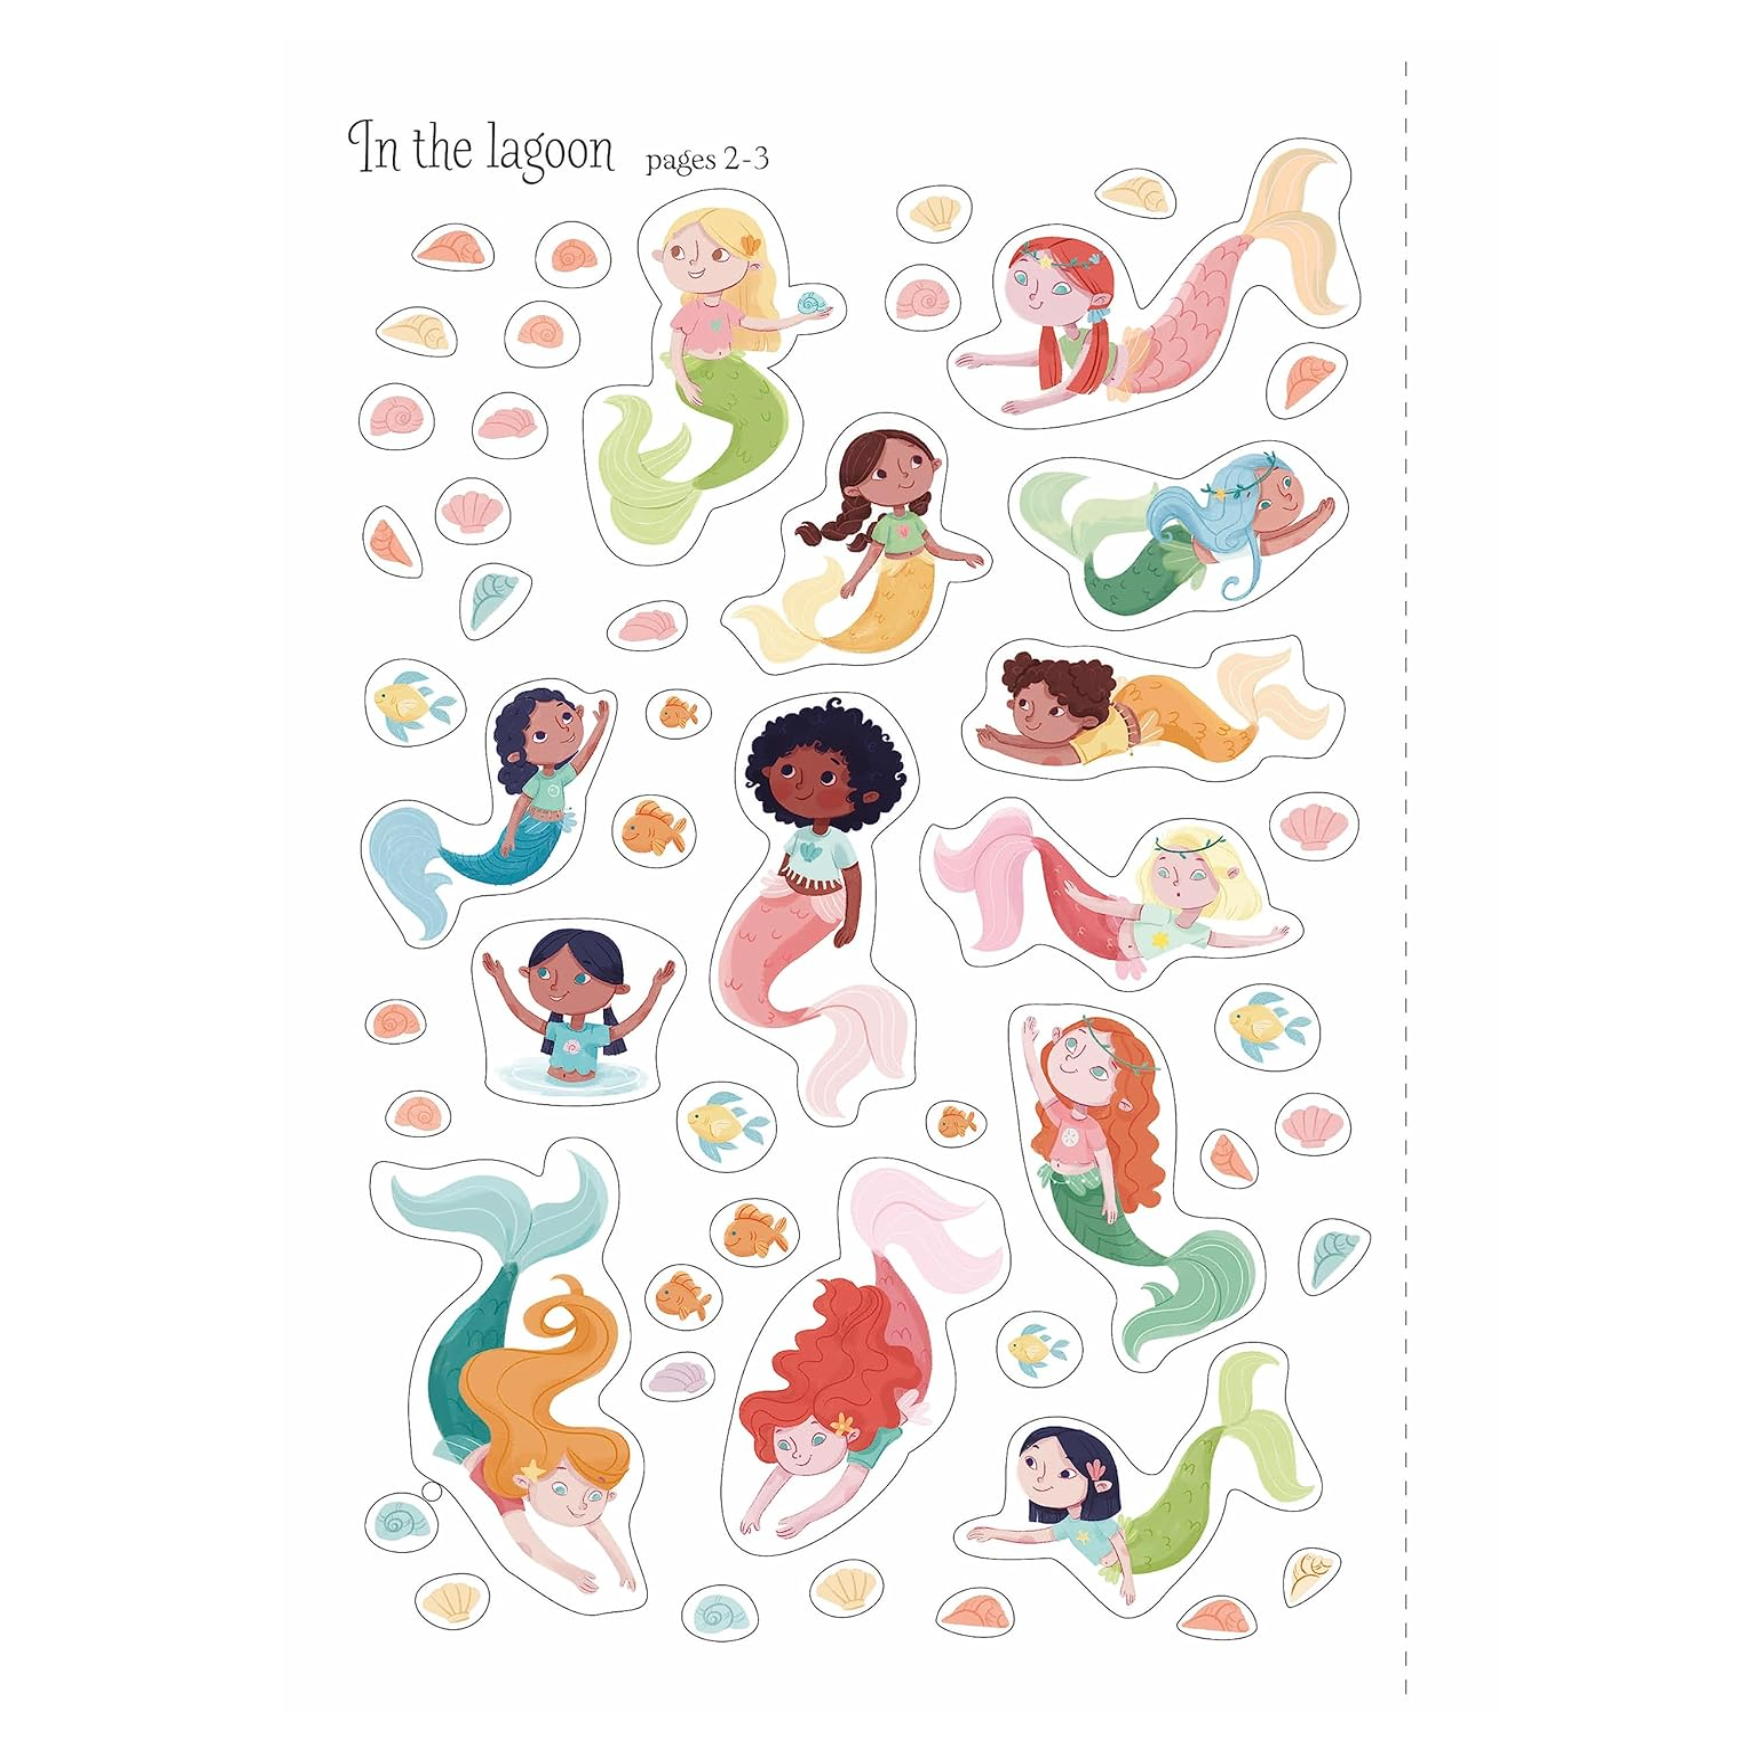 Little First Stickers - Mermaids